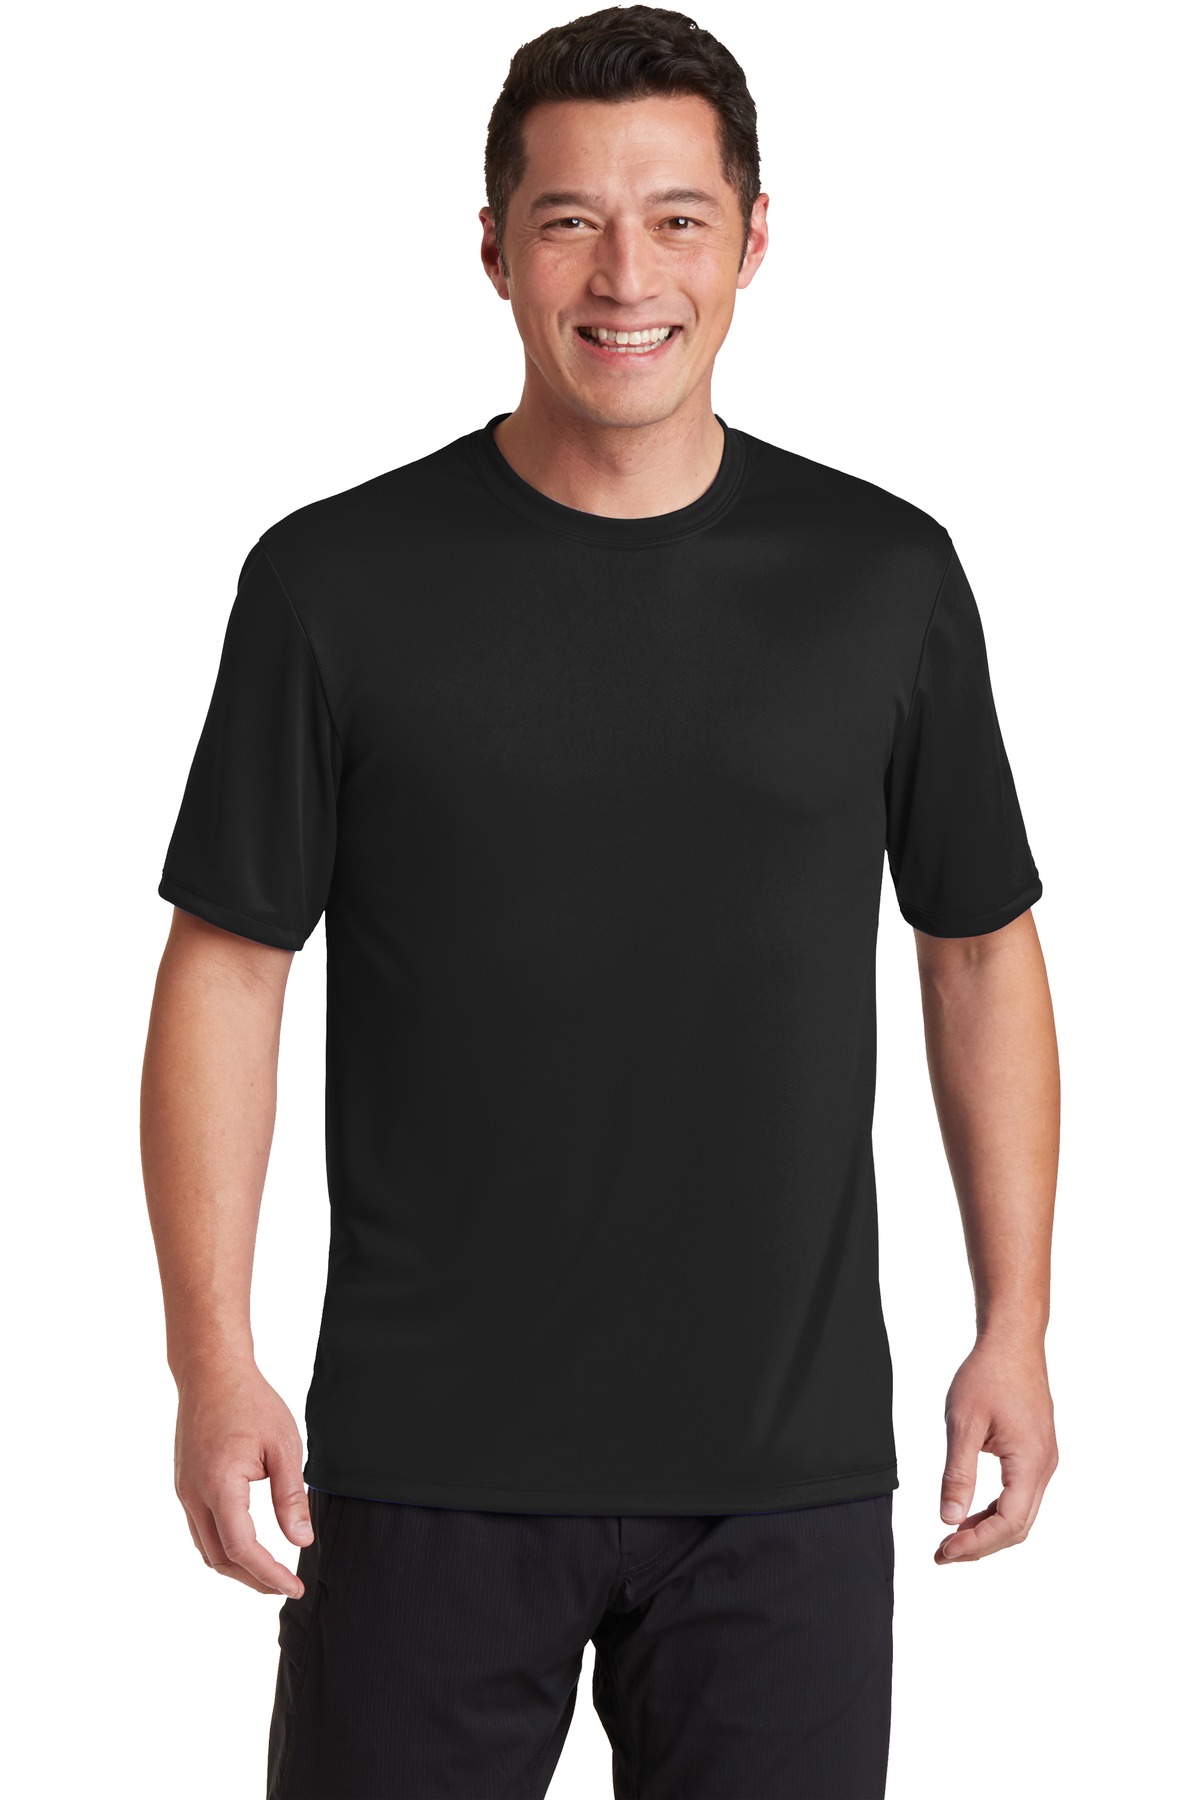 Hanes Cool Dri Performance T-Shirt - 4820